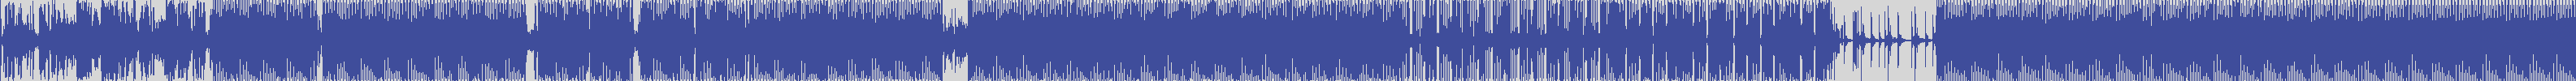 vitti_records [VIT010] Ticom - Loona [Original Mix] audio wave form